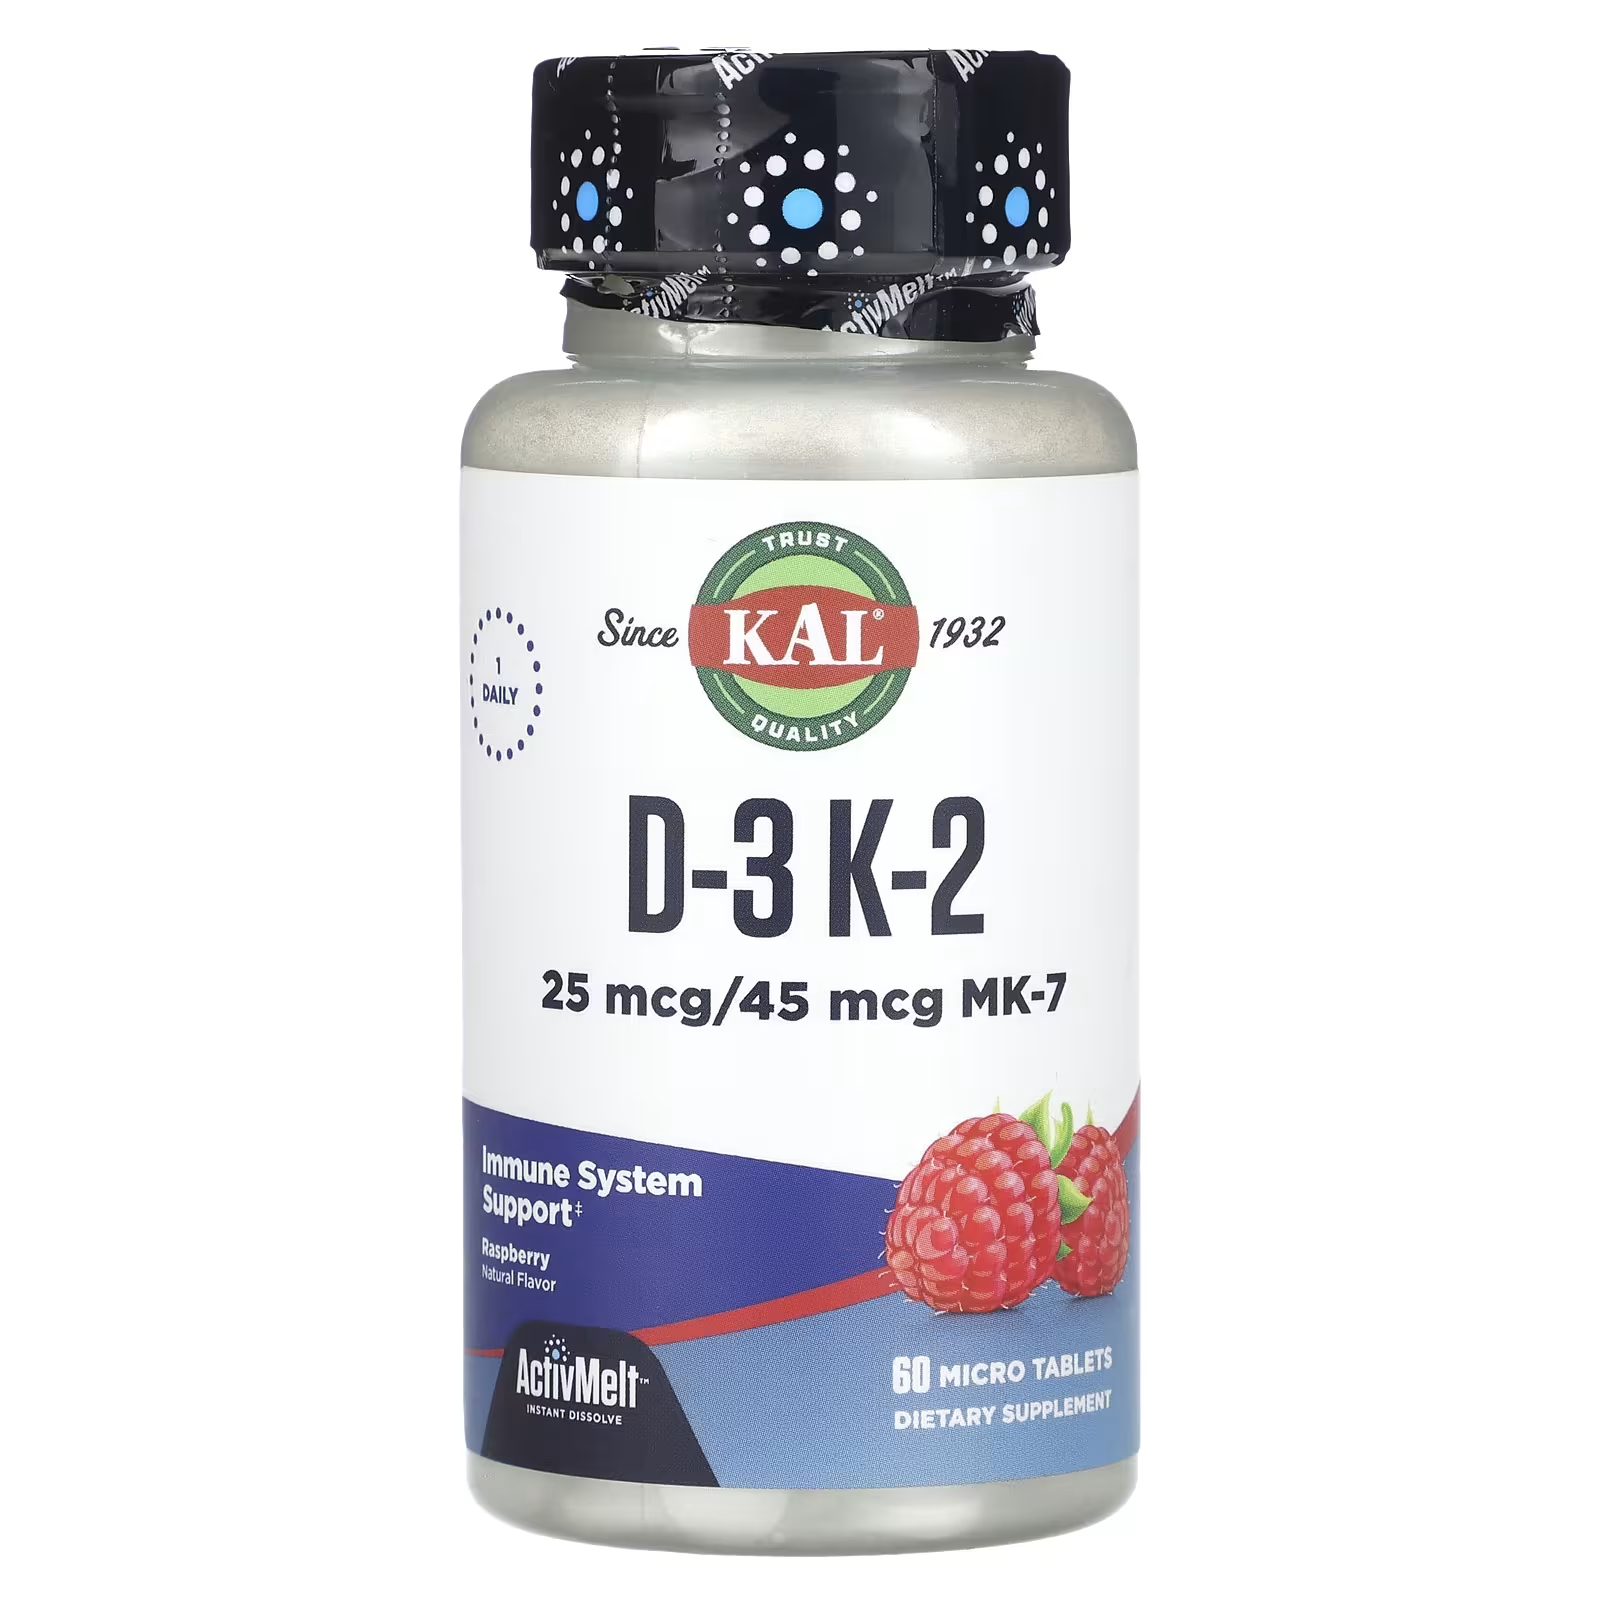 Пищевая добавка Kal D-3 K-2 малина, 60 микротаблеток пищевая добавка kal d 3 k 2 малина 60 микротаблеток